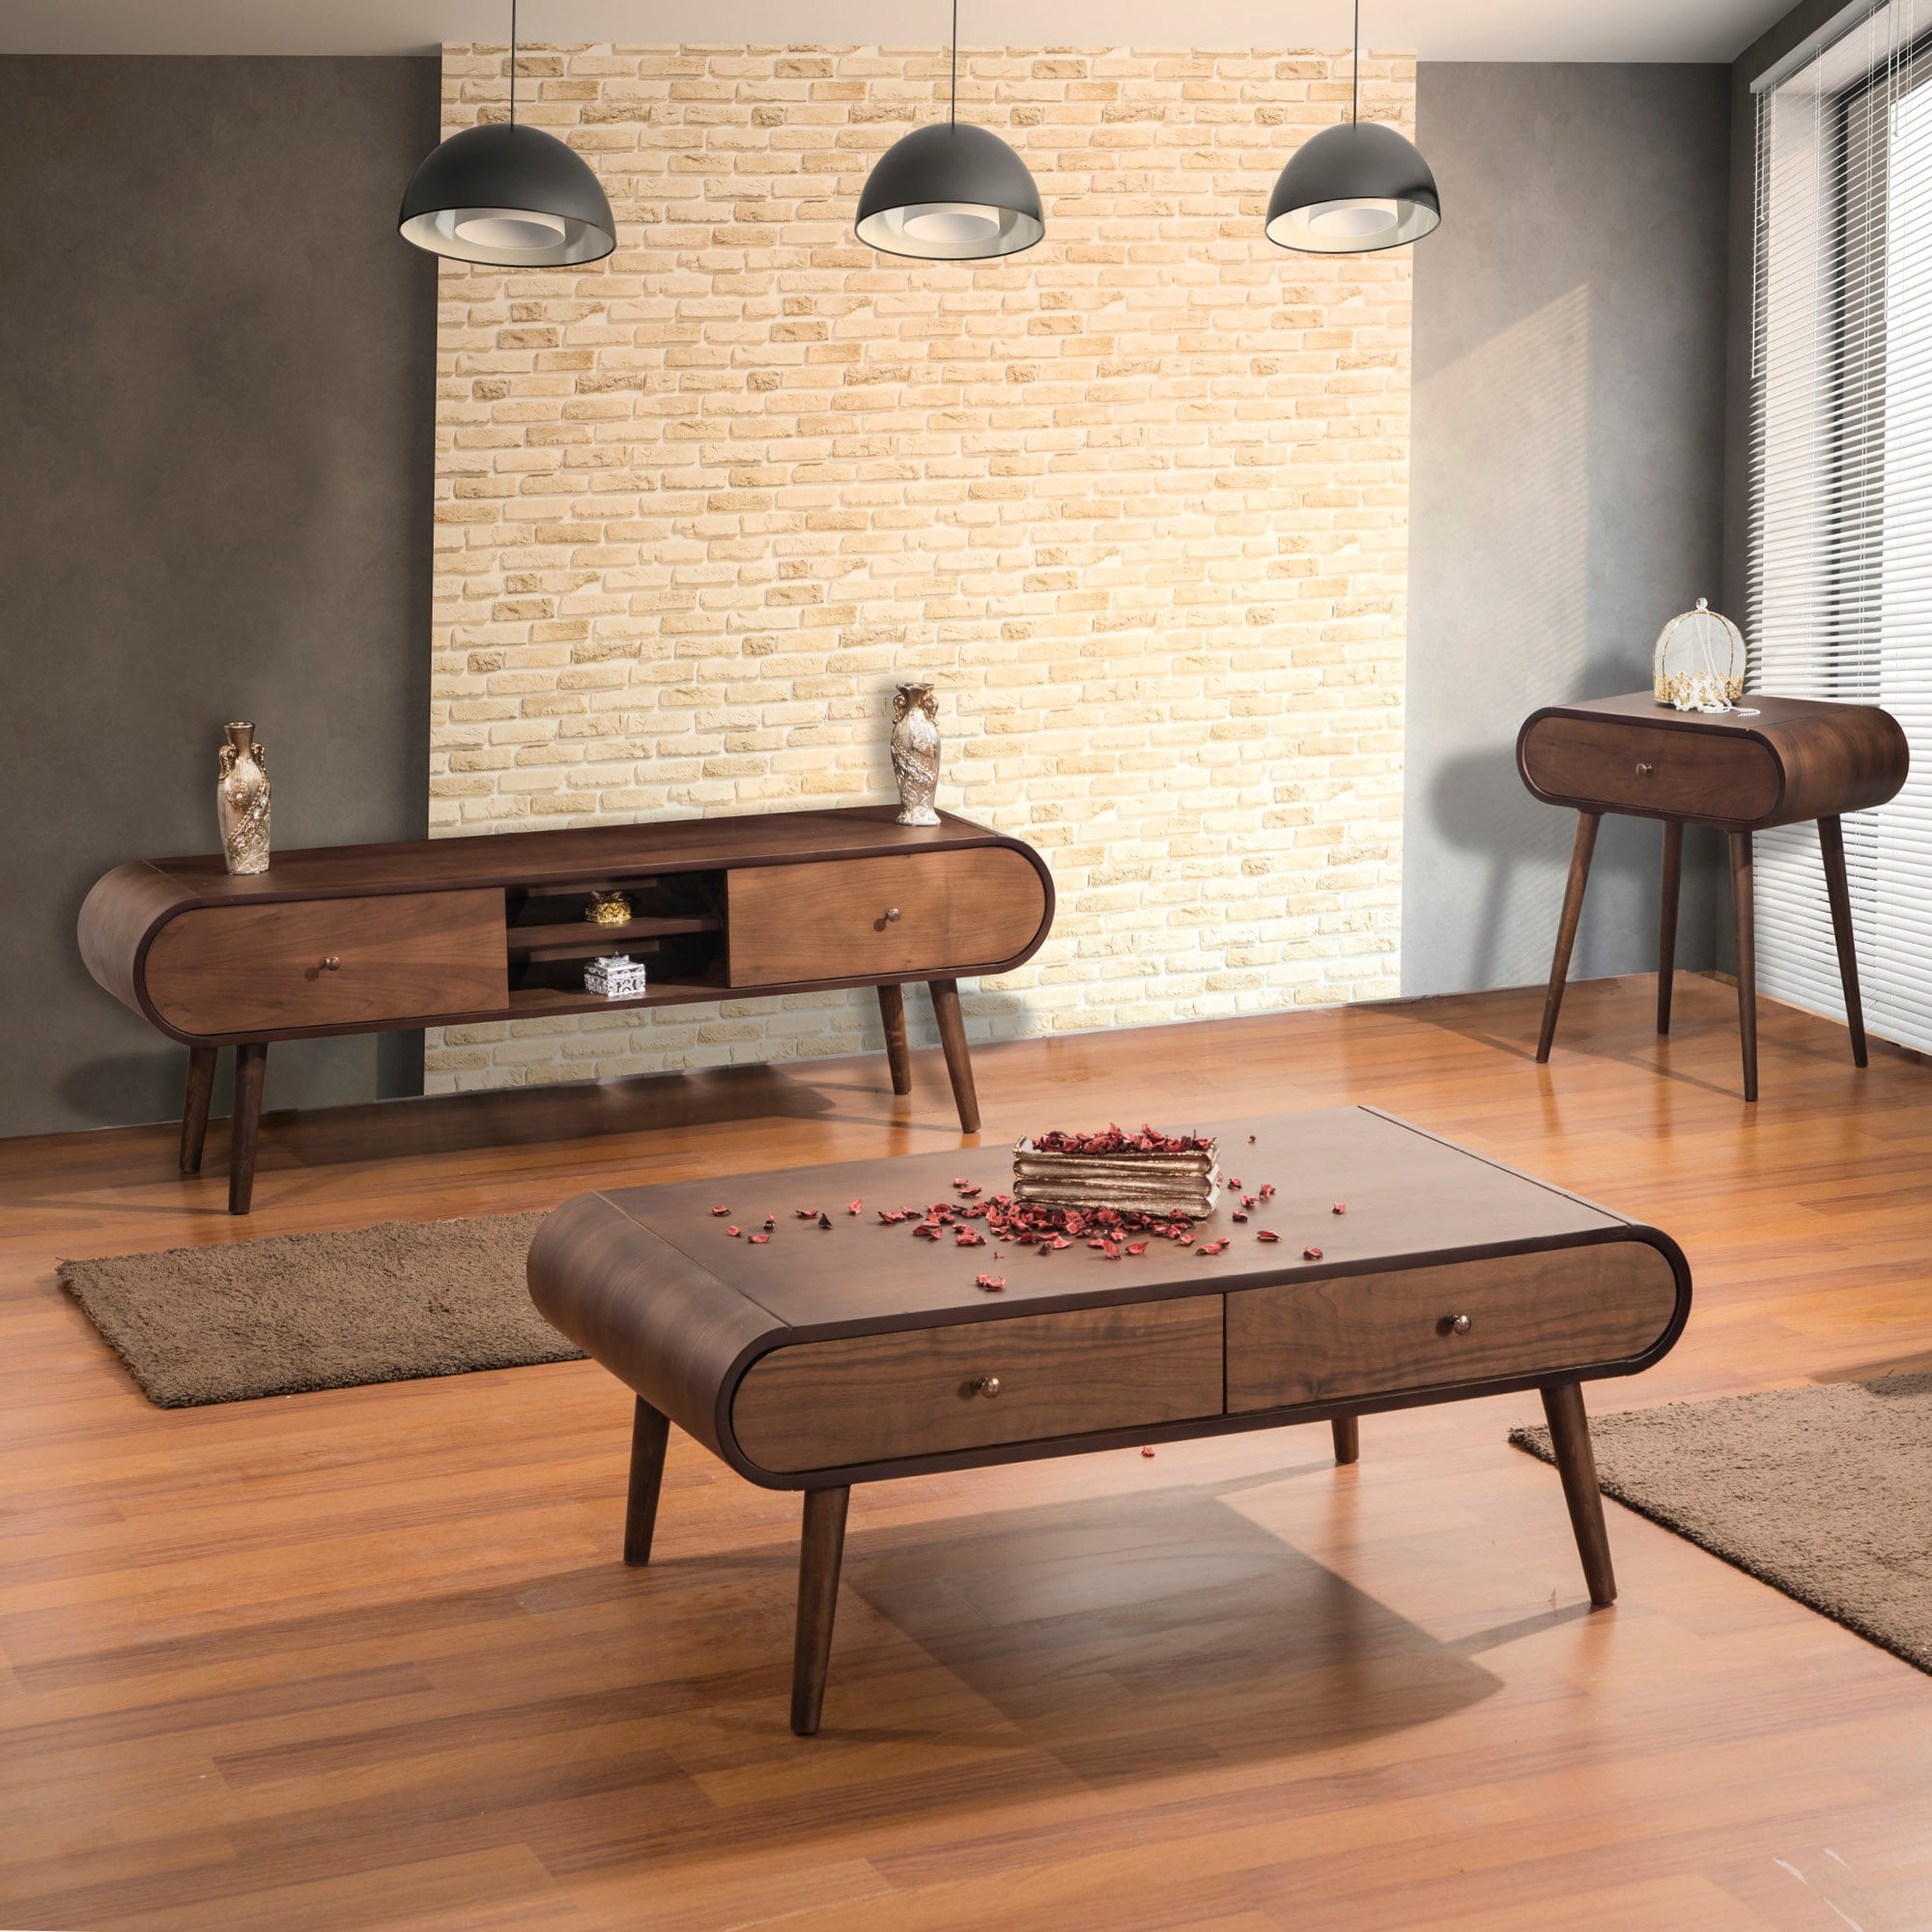 wood furniture for living room